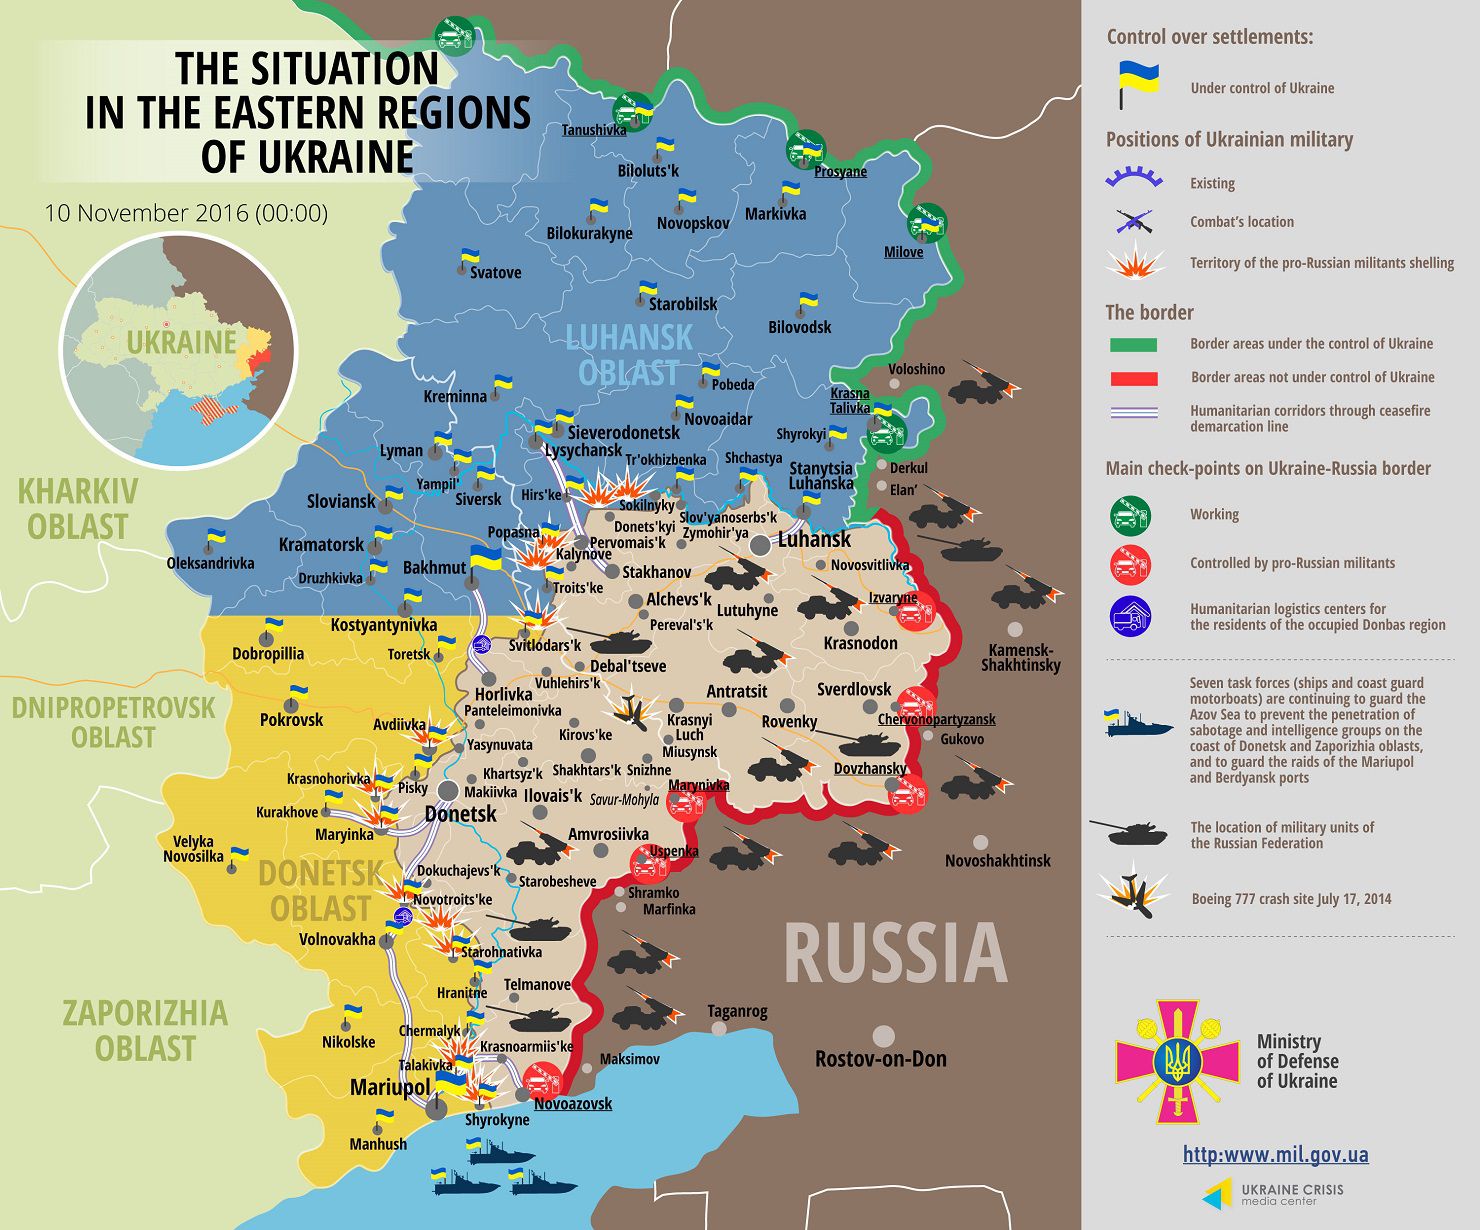 “Ceasefire” in Eastern Ukraine: Russian militants launch over 200 mortar shells last day